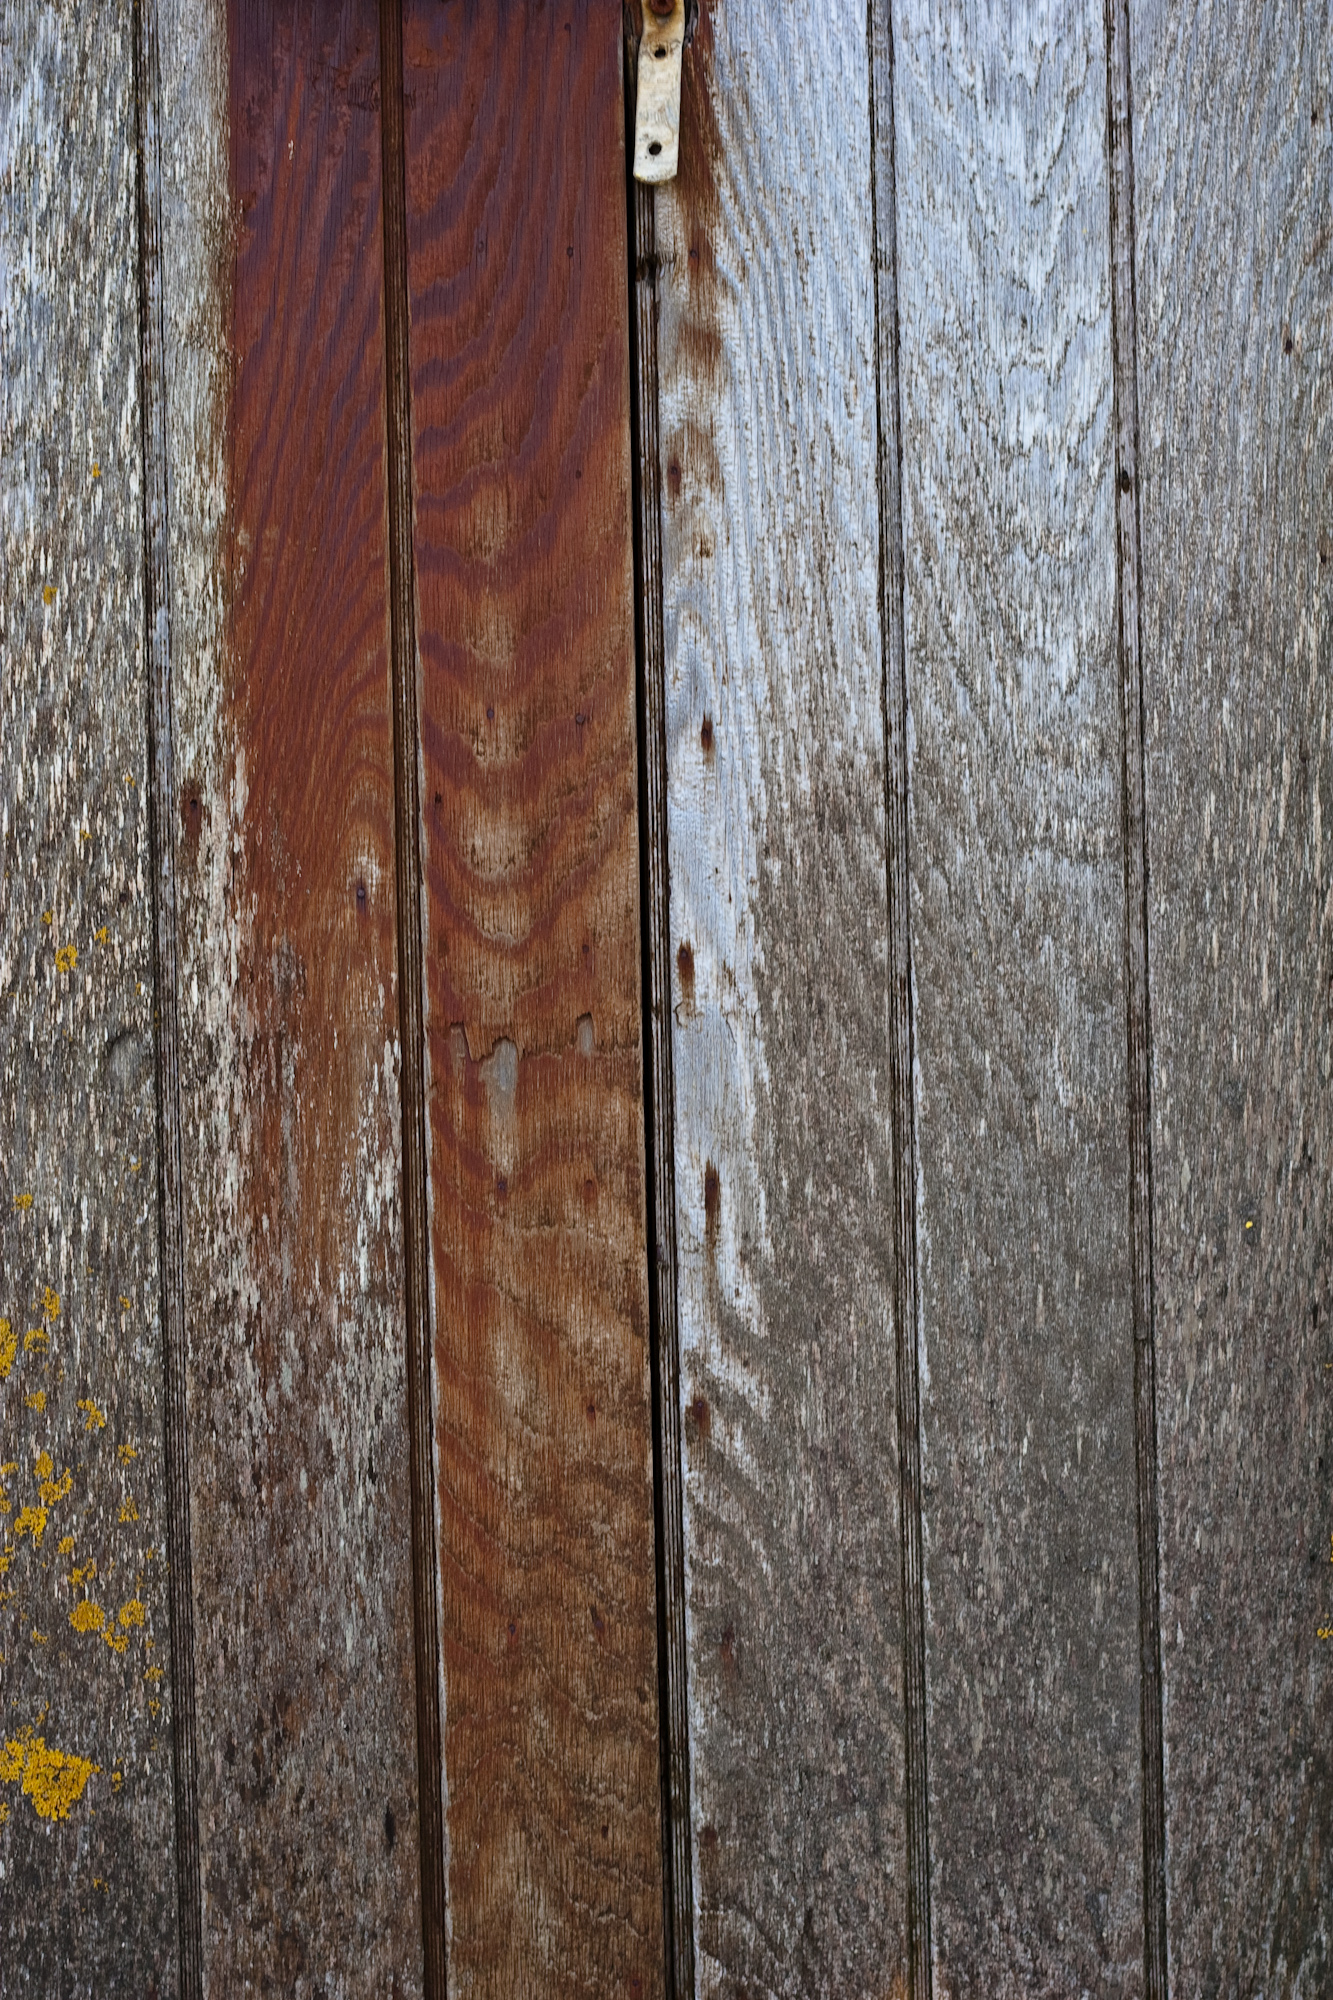 Worn wood texture photo